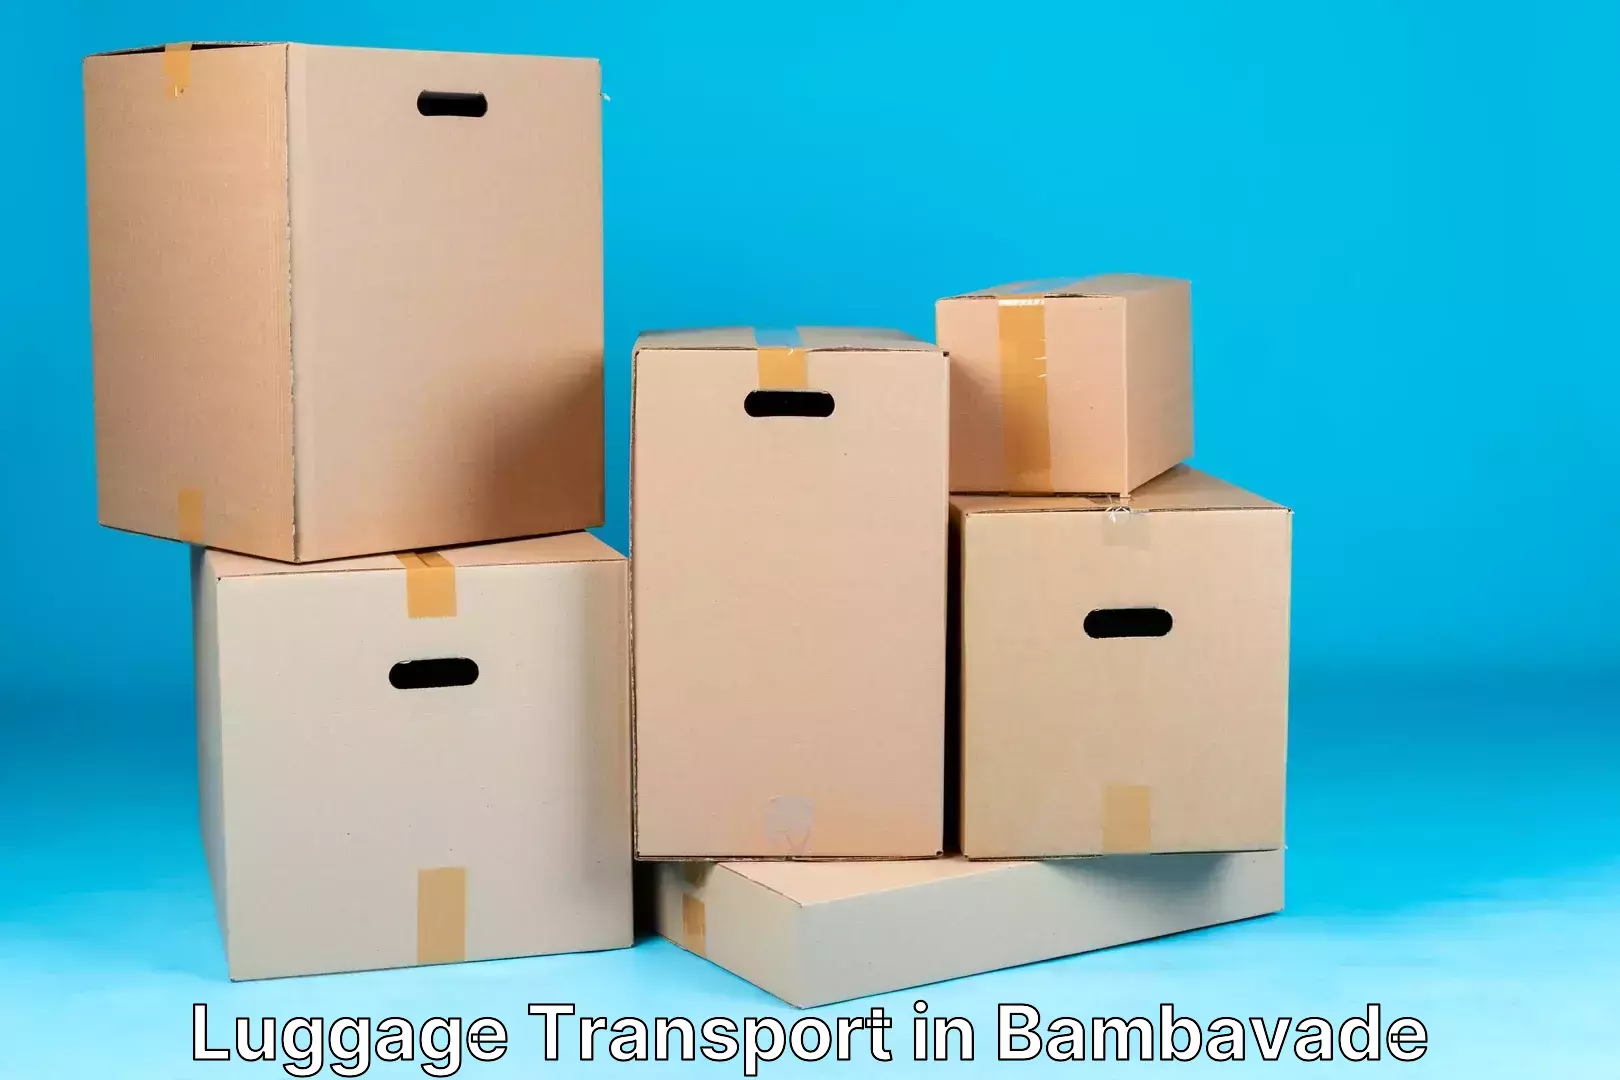 Baggage transport management in Bambavade